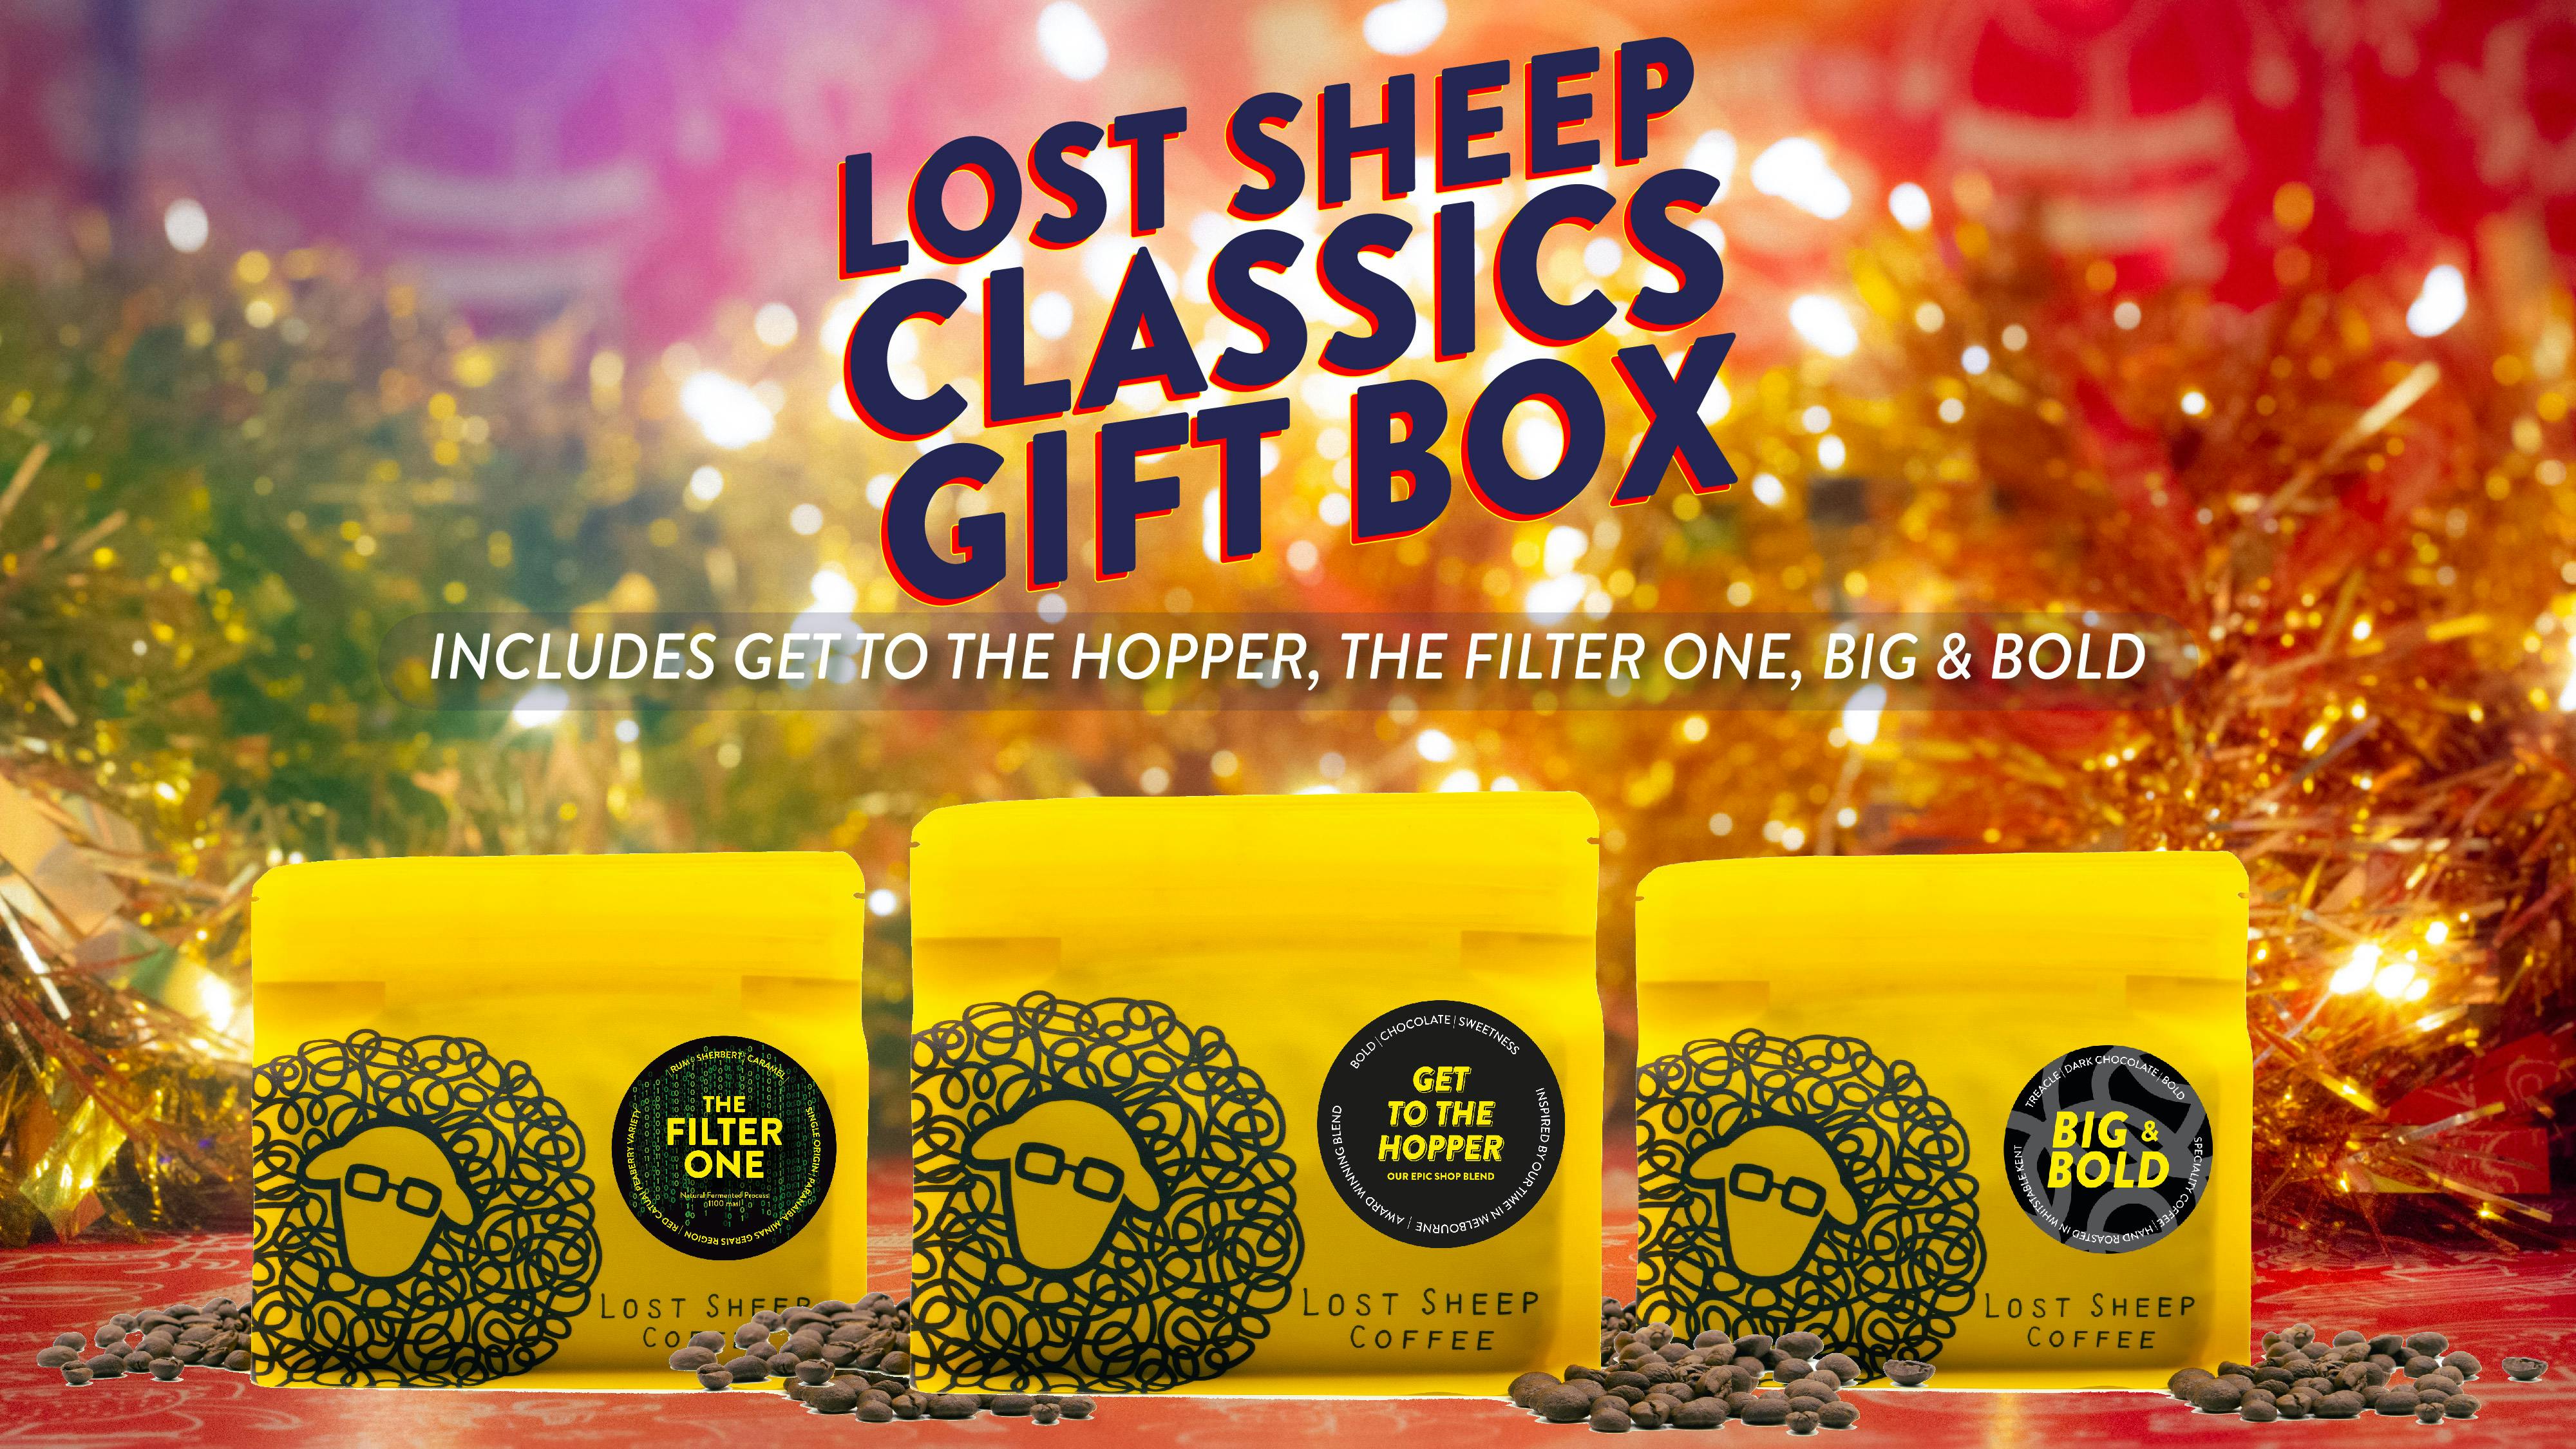 Lost Sheep Coffee Classics Gift Box Image